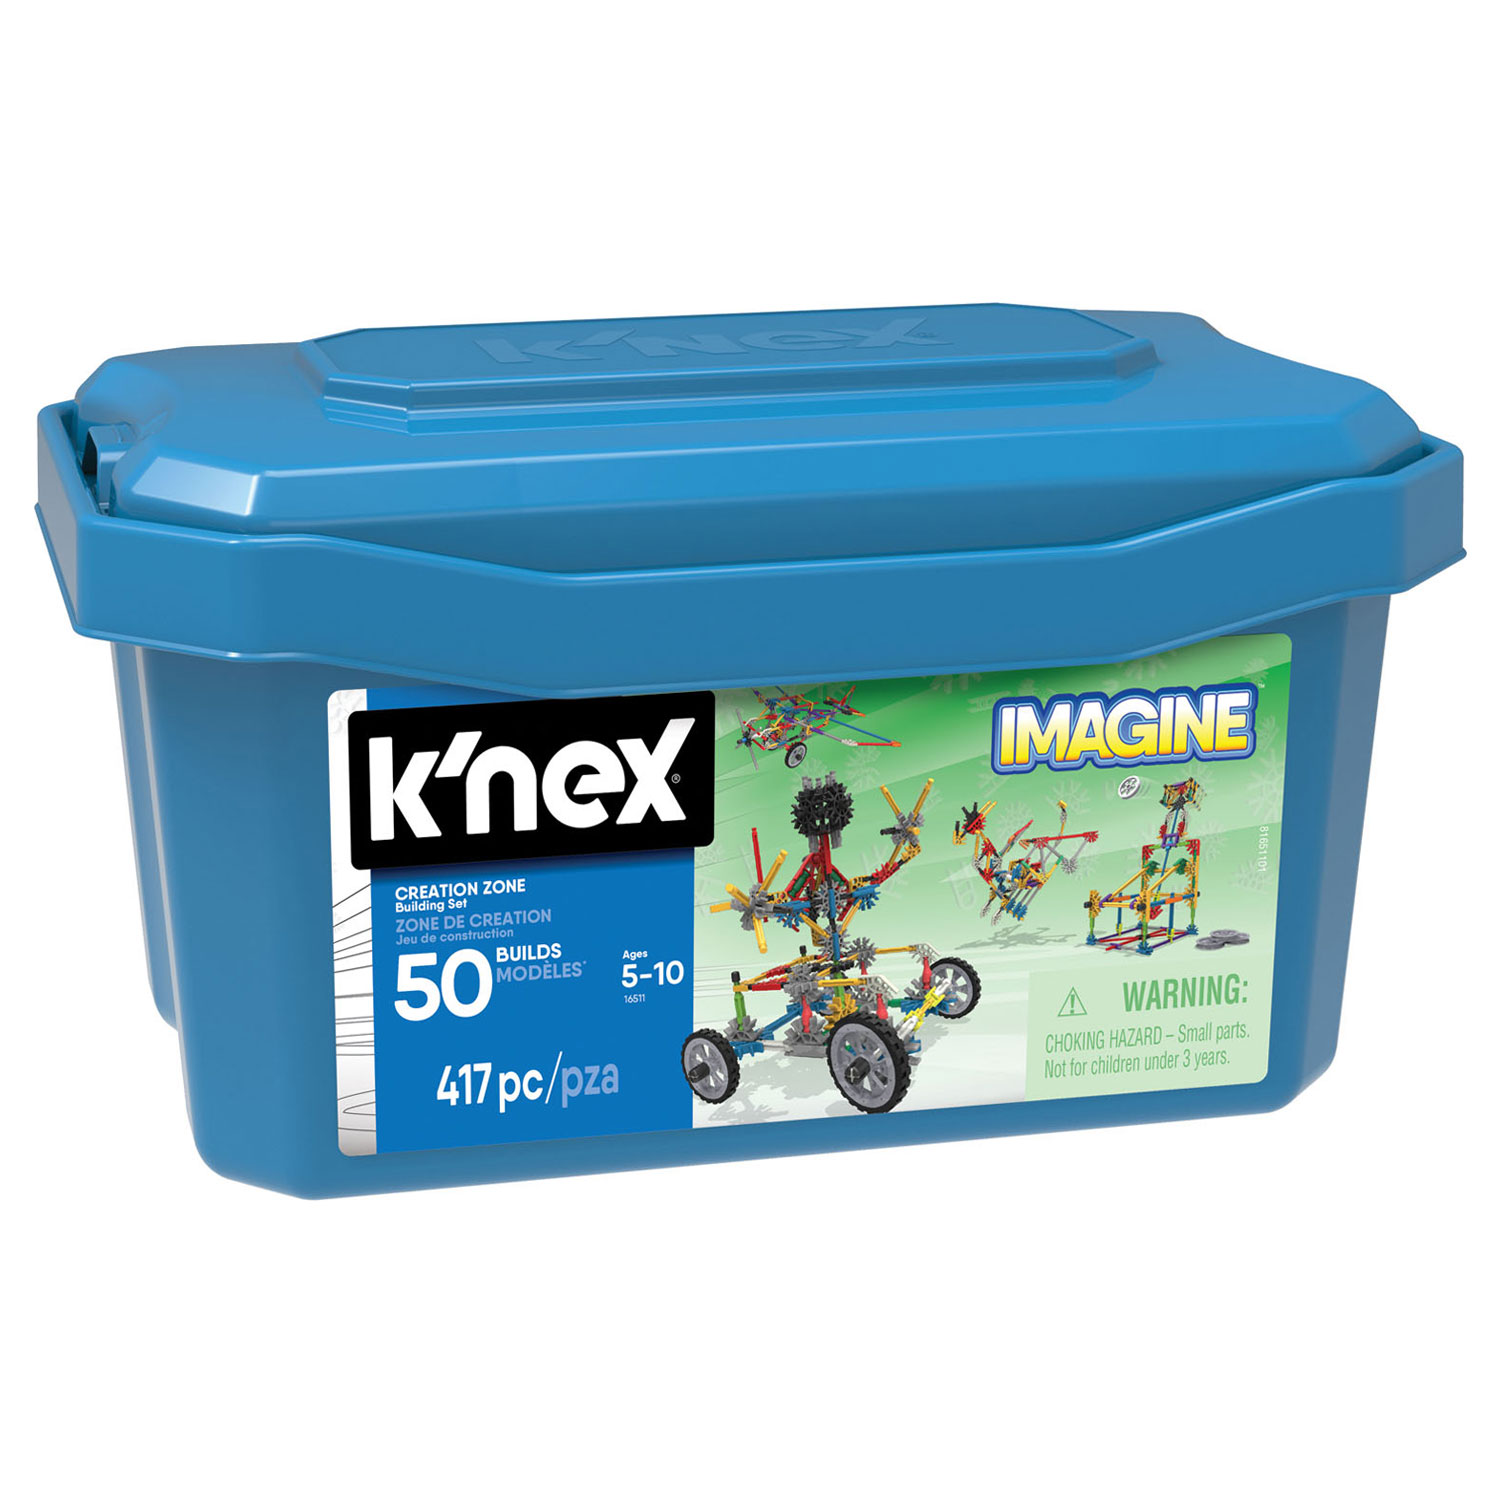 vee Specialist Afwezigheid K'Nex Creation Zone Box, 50 Modellen | Thimble Toys